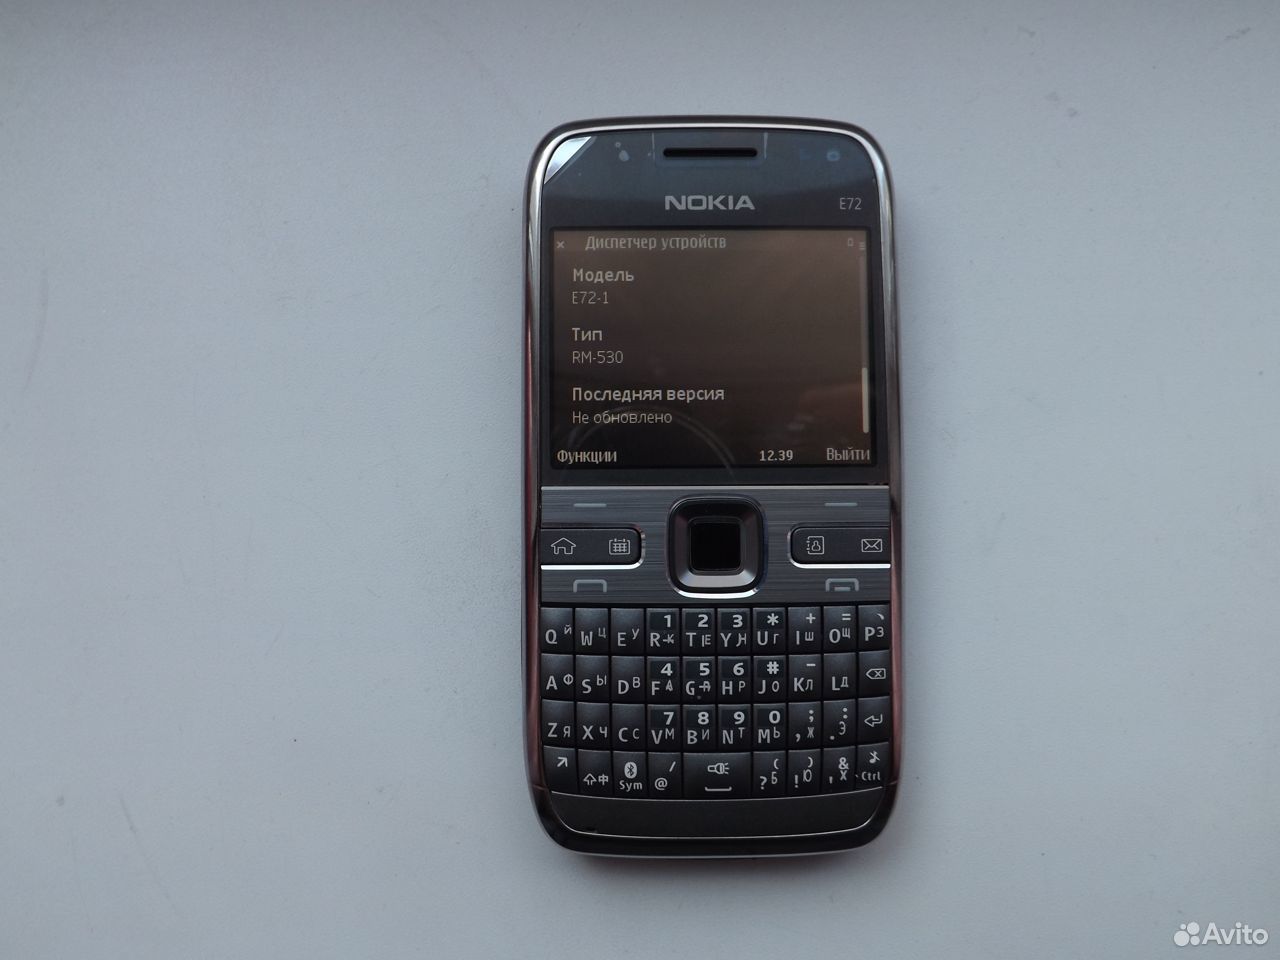 Nokia E72 Новый Symbian 5Mpx Wi-Fi 3G GPS Нокиа 89637385513 купить 6